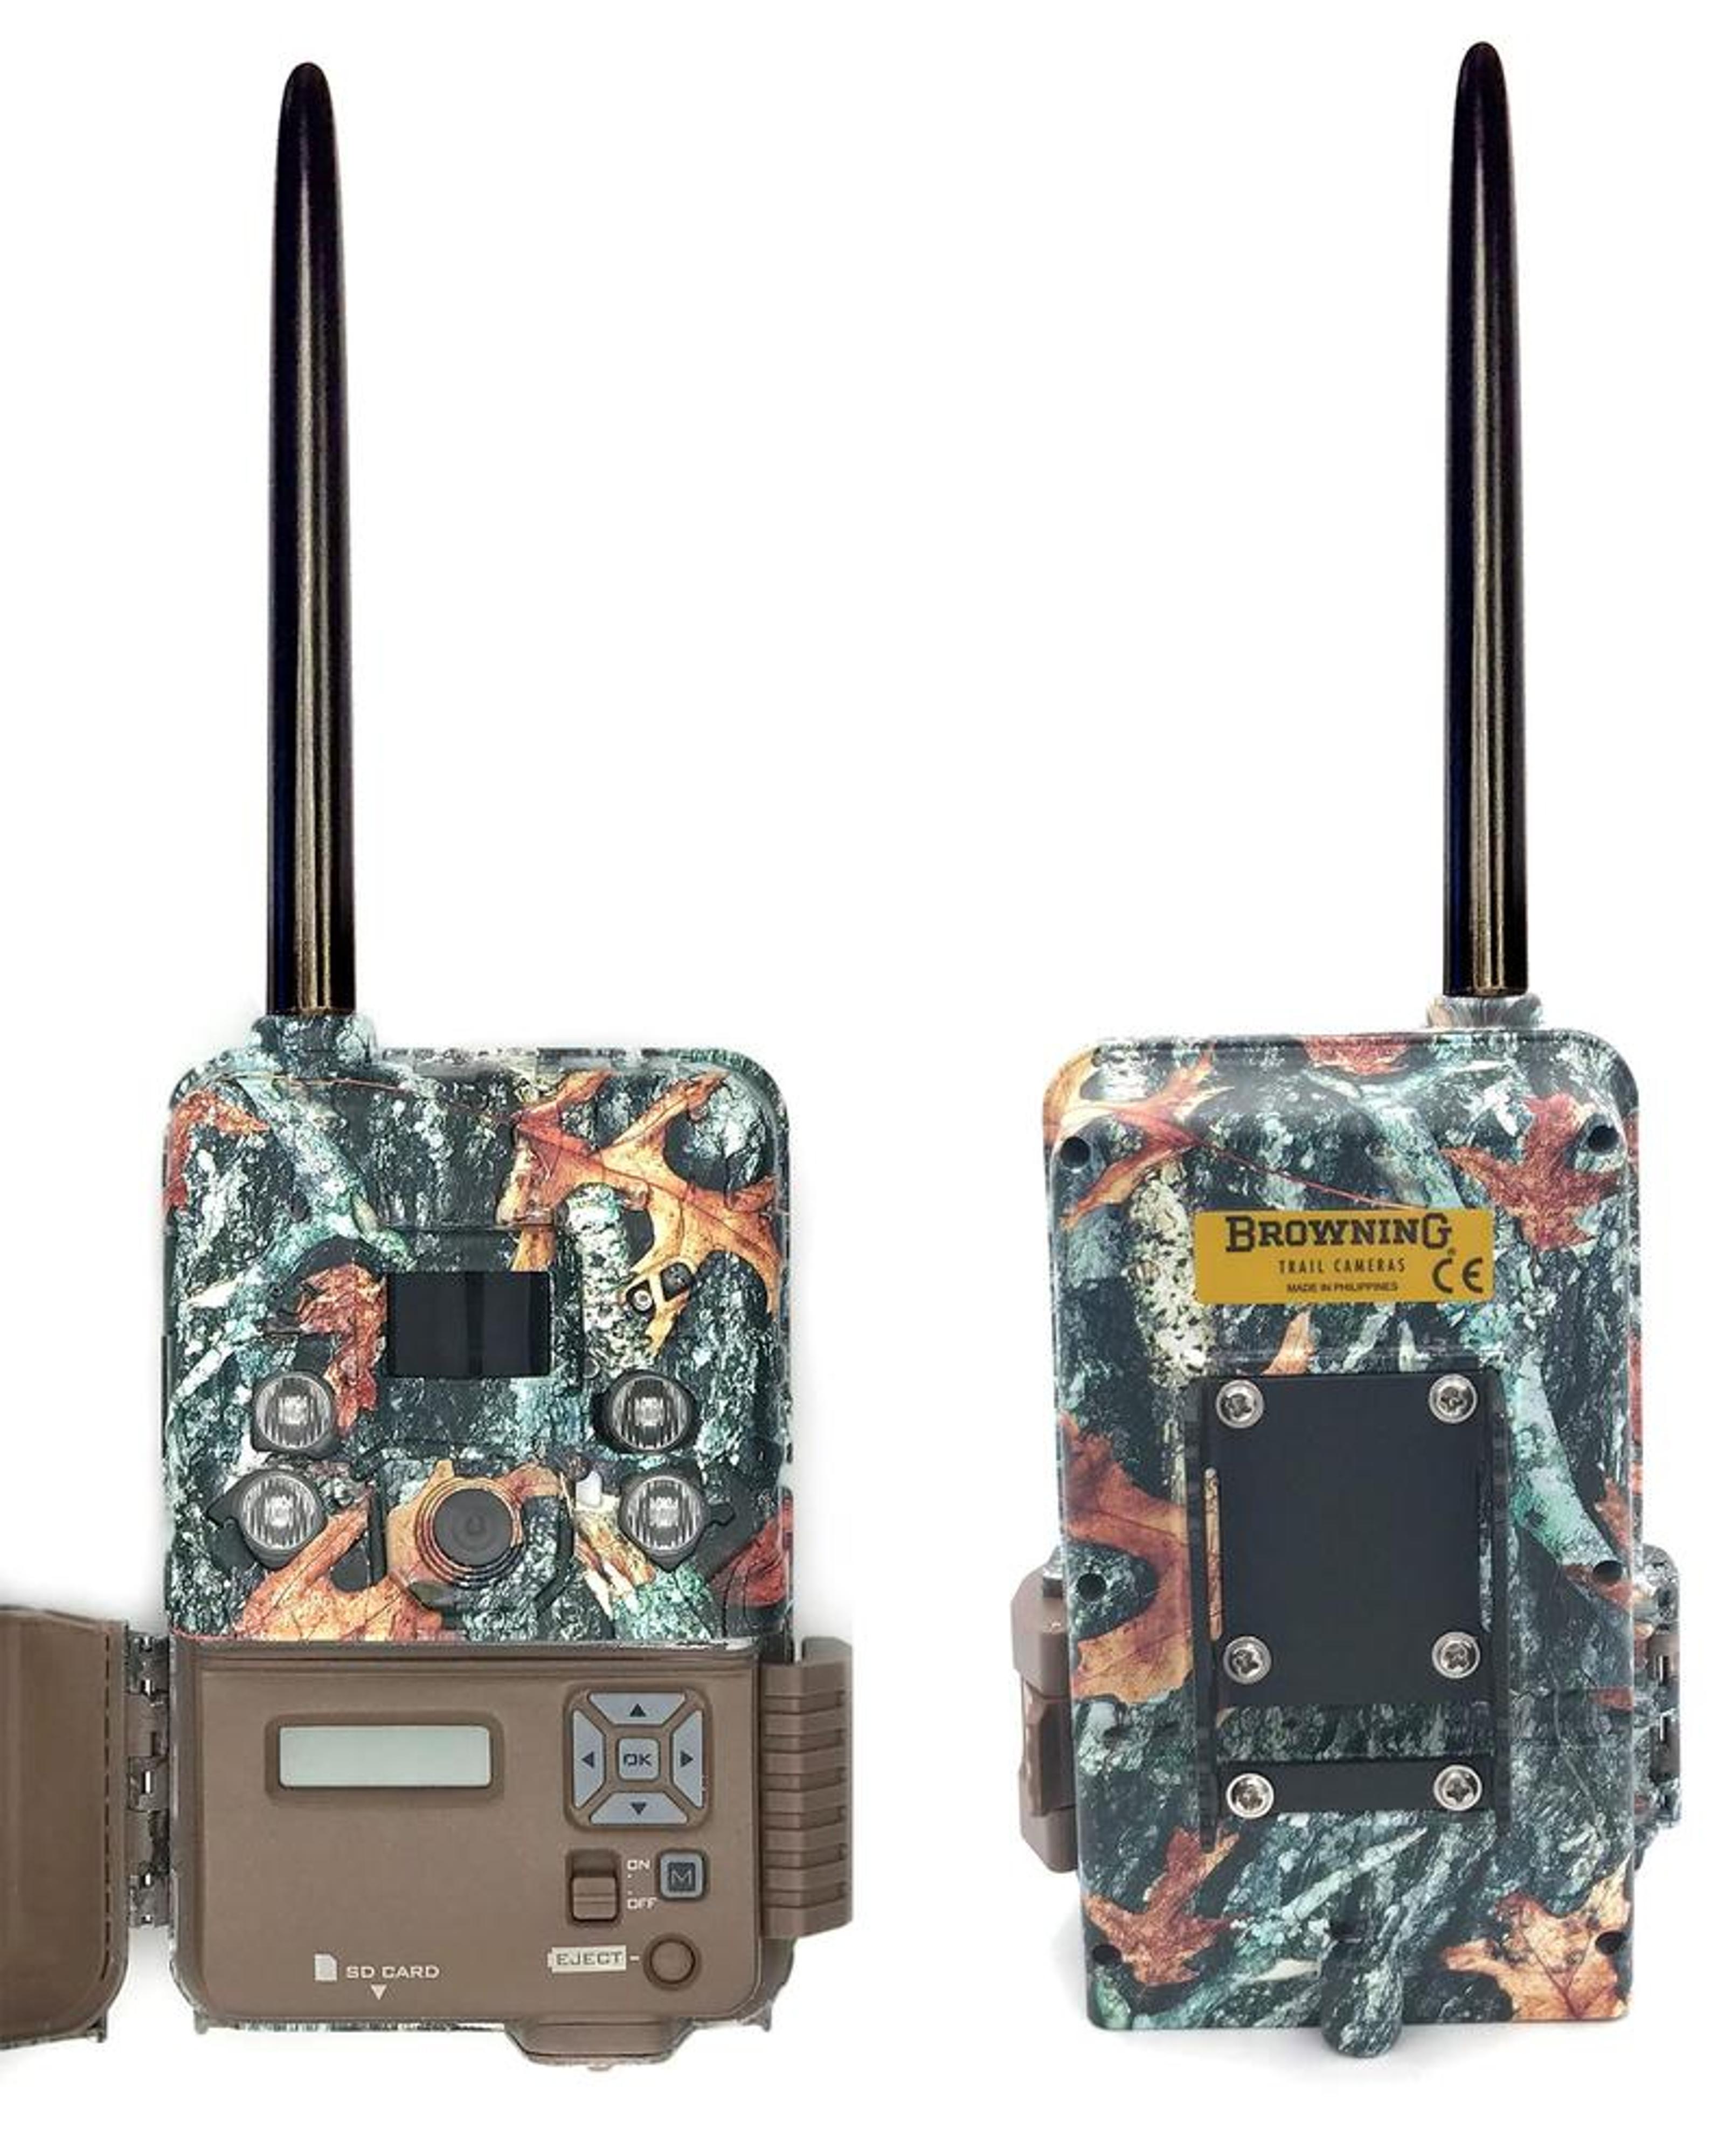  Browning Btc- Dwps- Att Defender Wireless Pro Scout Cellular Trail